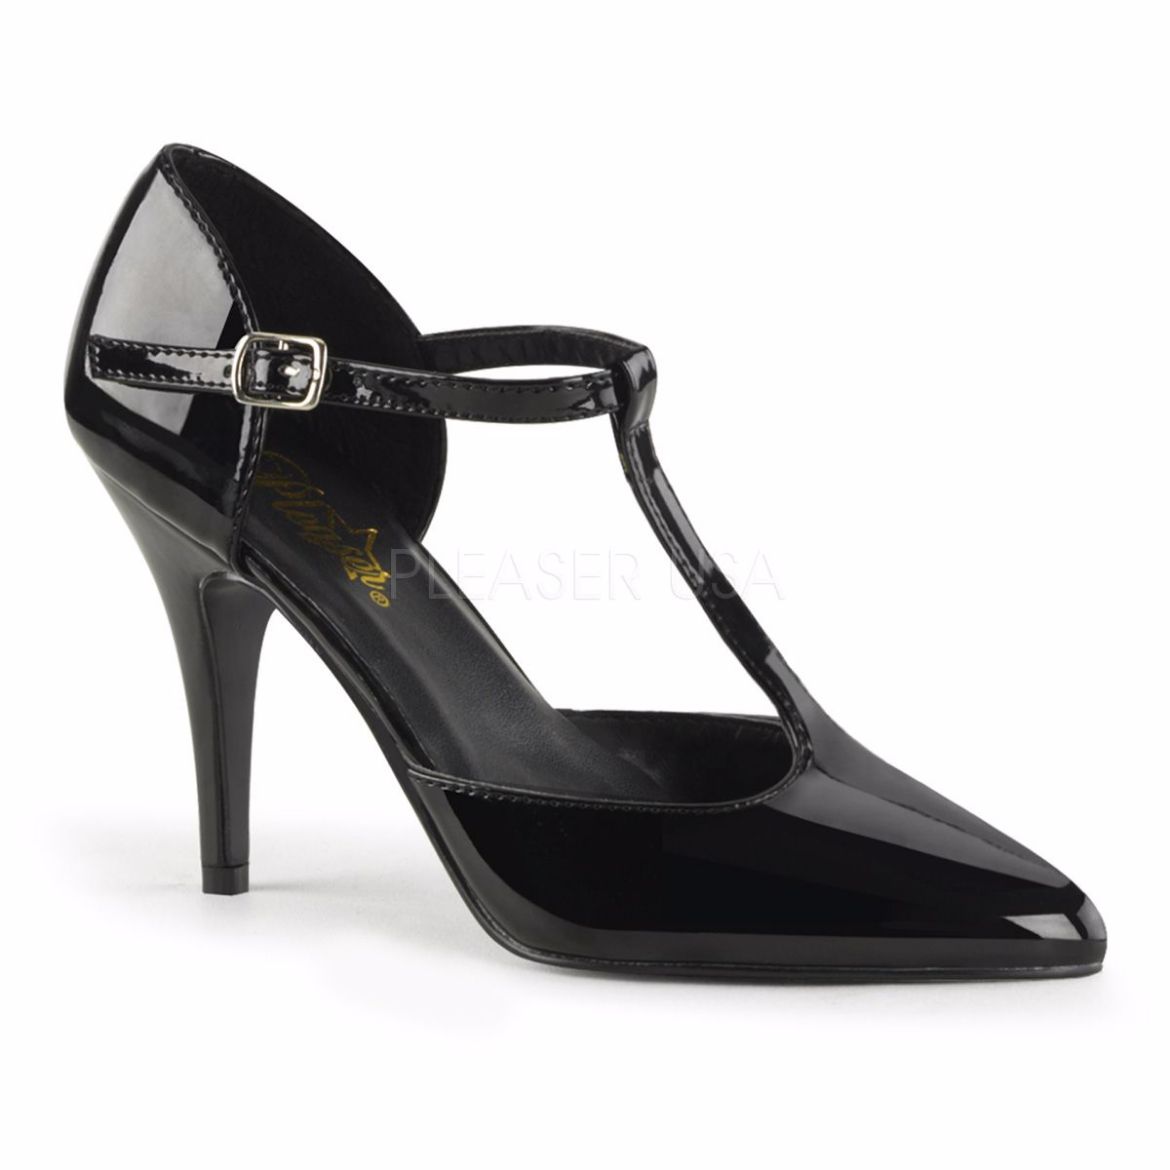 Product image of Pleaser Vanity-415 Black Patent, 4 inch (10.2 cm) Heel Court Pump Shoes